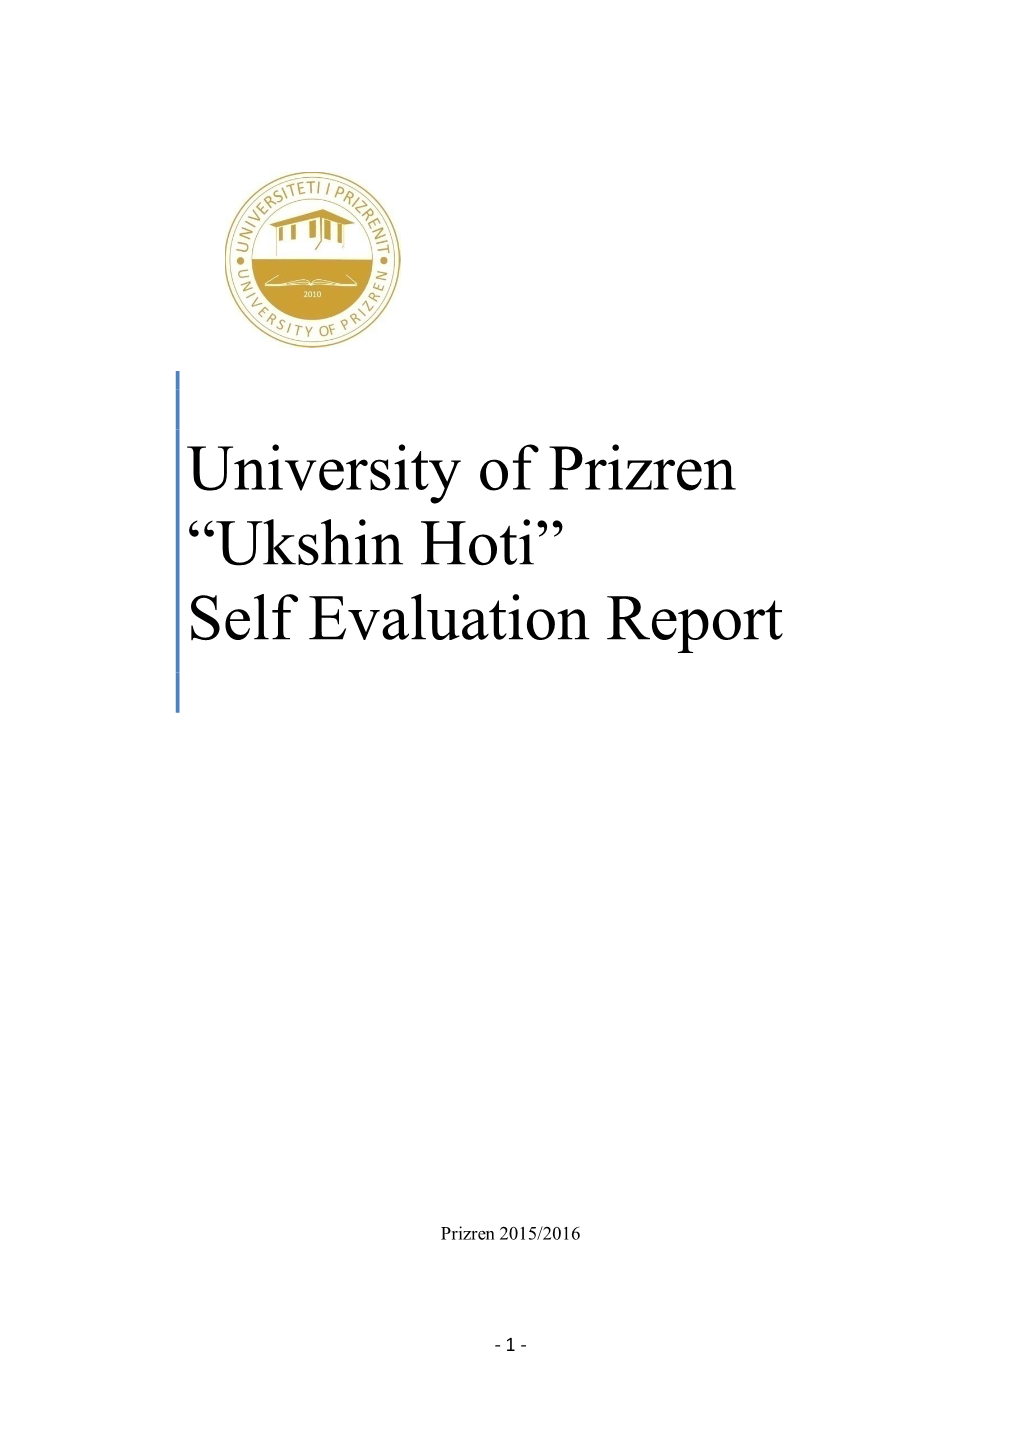 University of Prizren “Ukshin Hoti” Self Evaluation Report